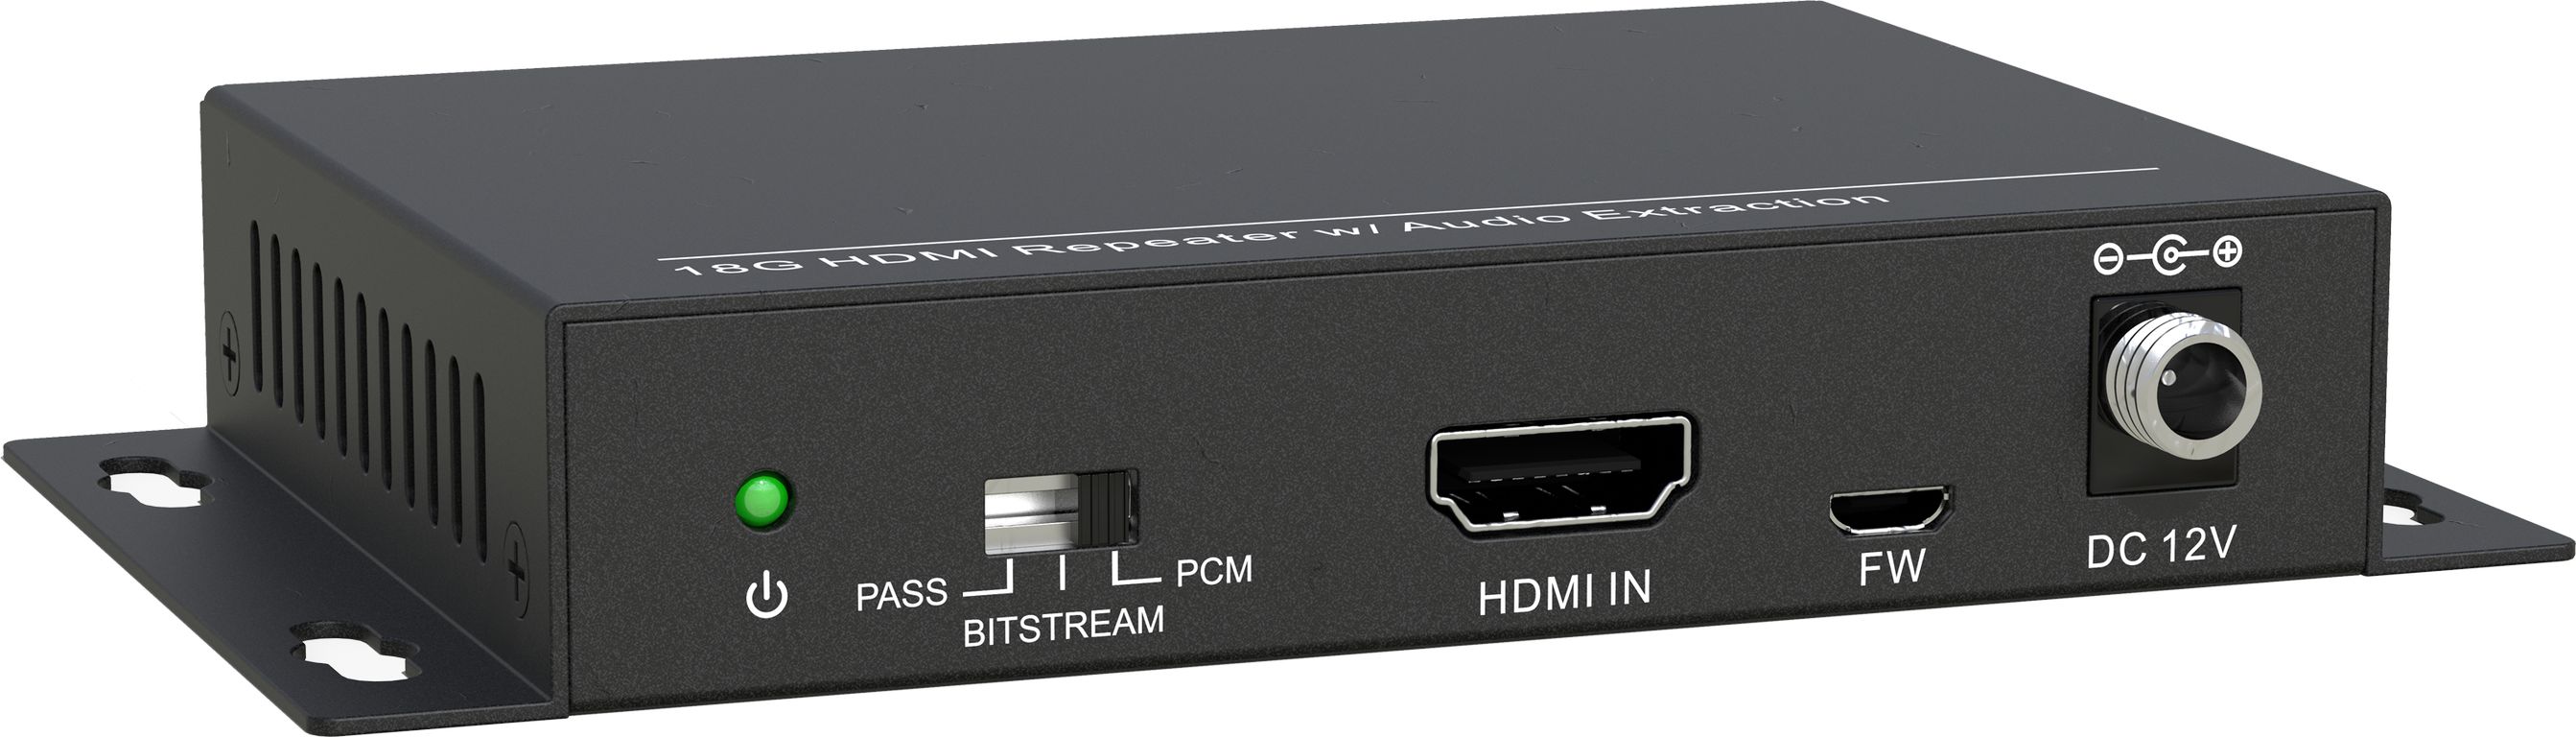 HDMI коммутаторы, разветвители, повторители Digis SS-AC1-4K2 hdmi кабели digis dsm ch5 8k aoc